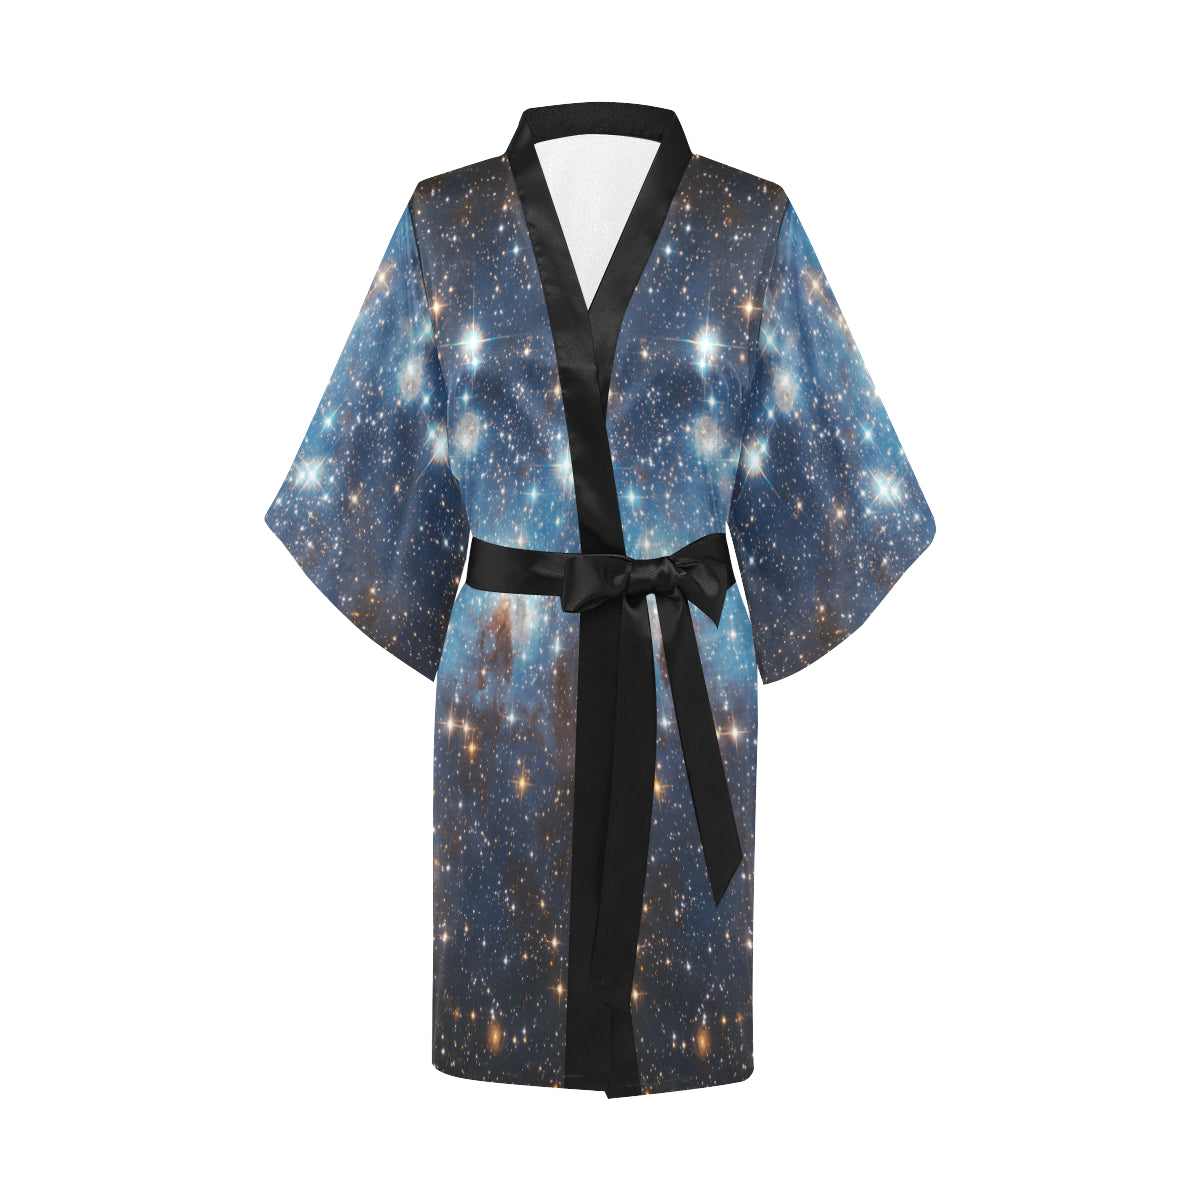 Galaxy Space Kimono Robe, Celestial Blue Outer Stars Japanese Women's Short Lounge Sleepwear Bohemian Sexy Nerd Bathrobe Pajamas Starcove Fashion